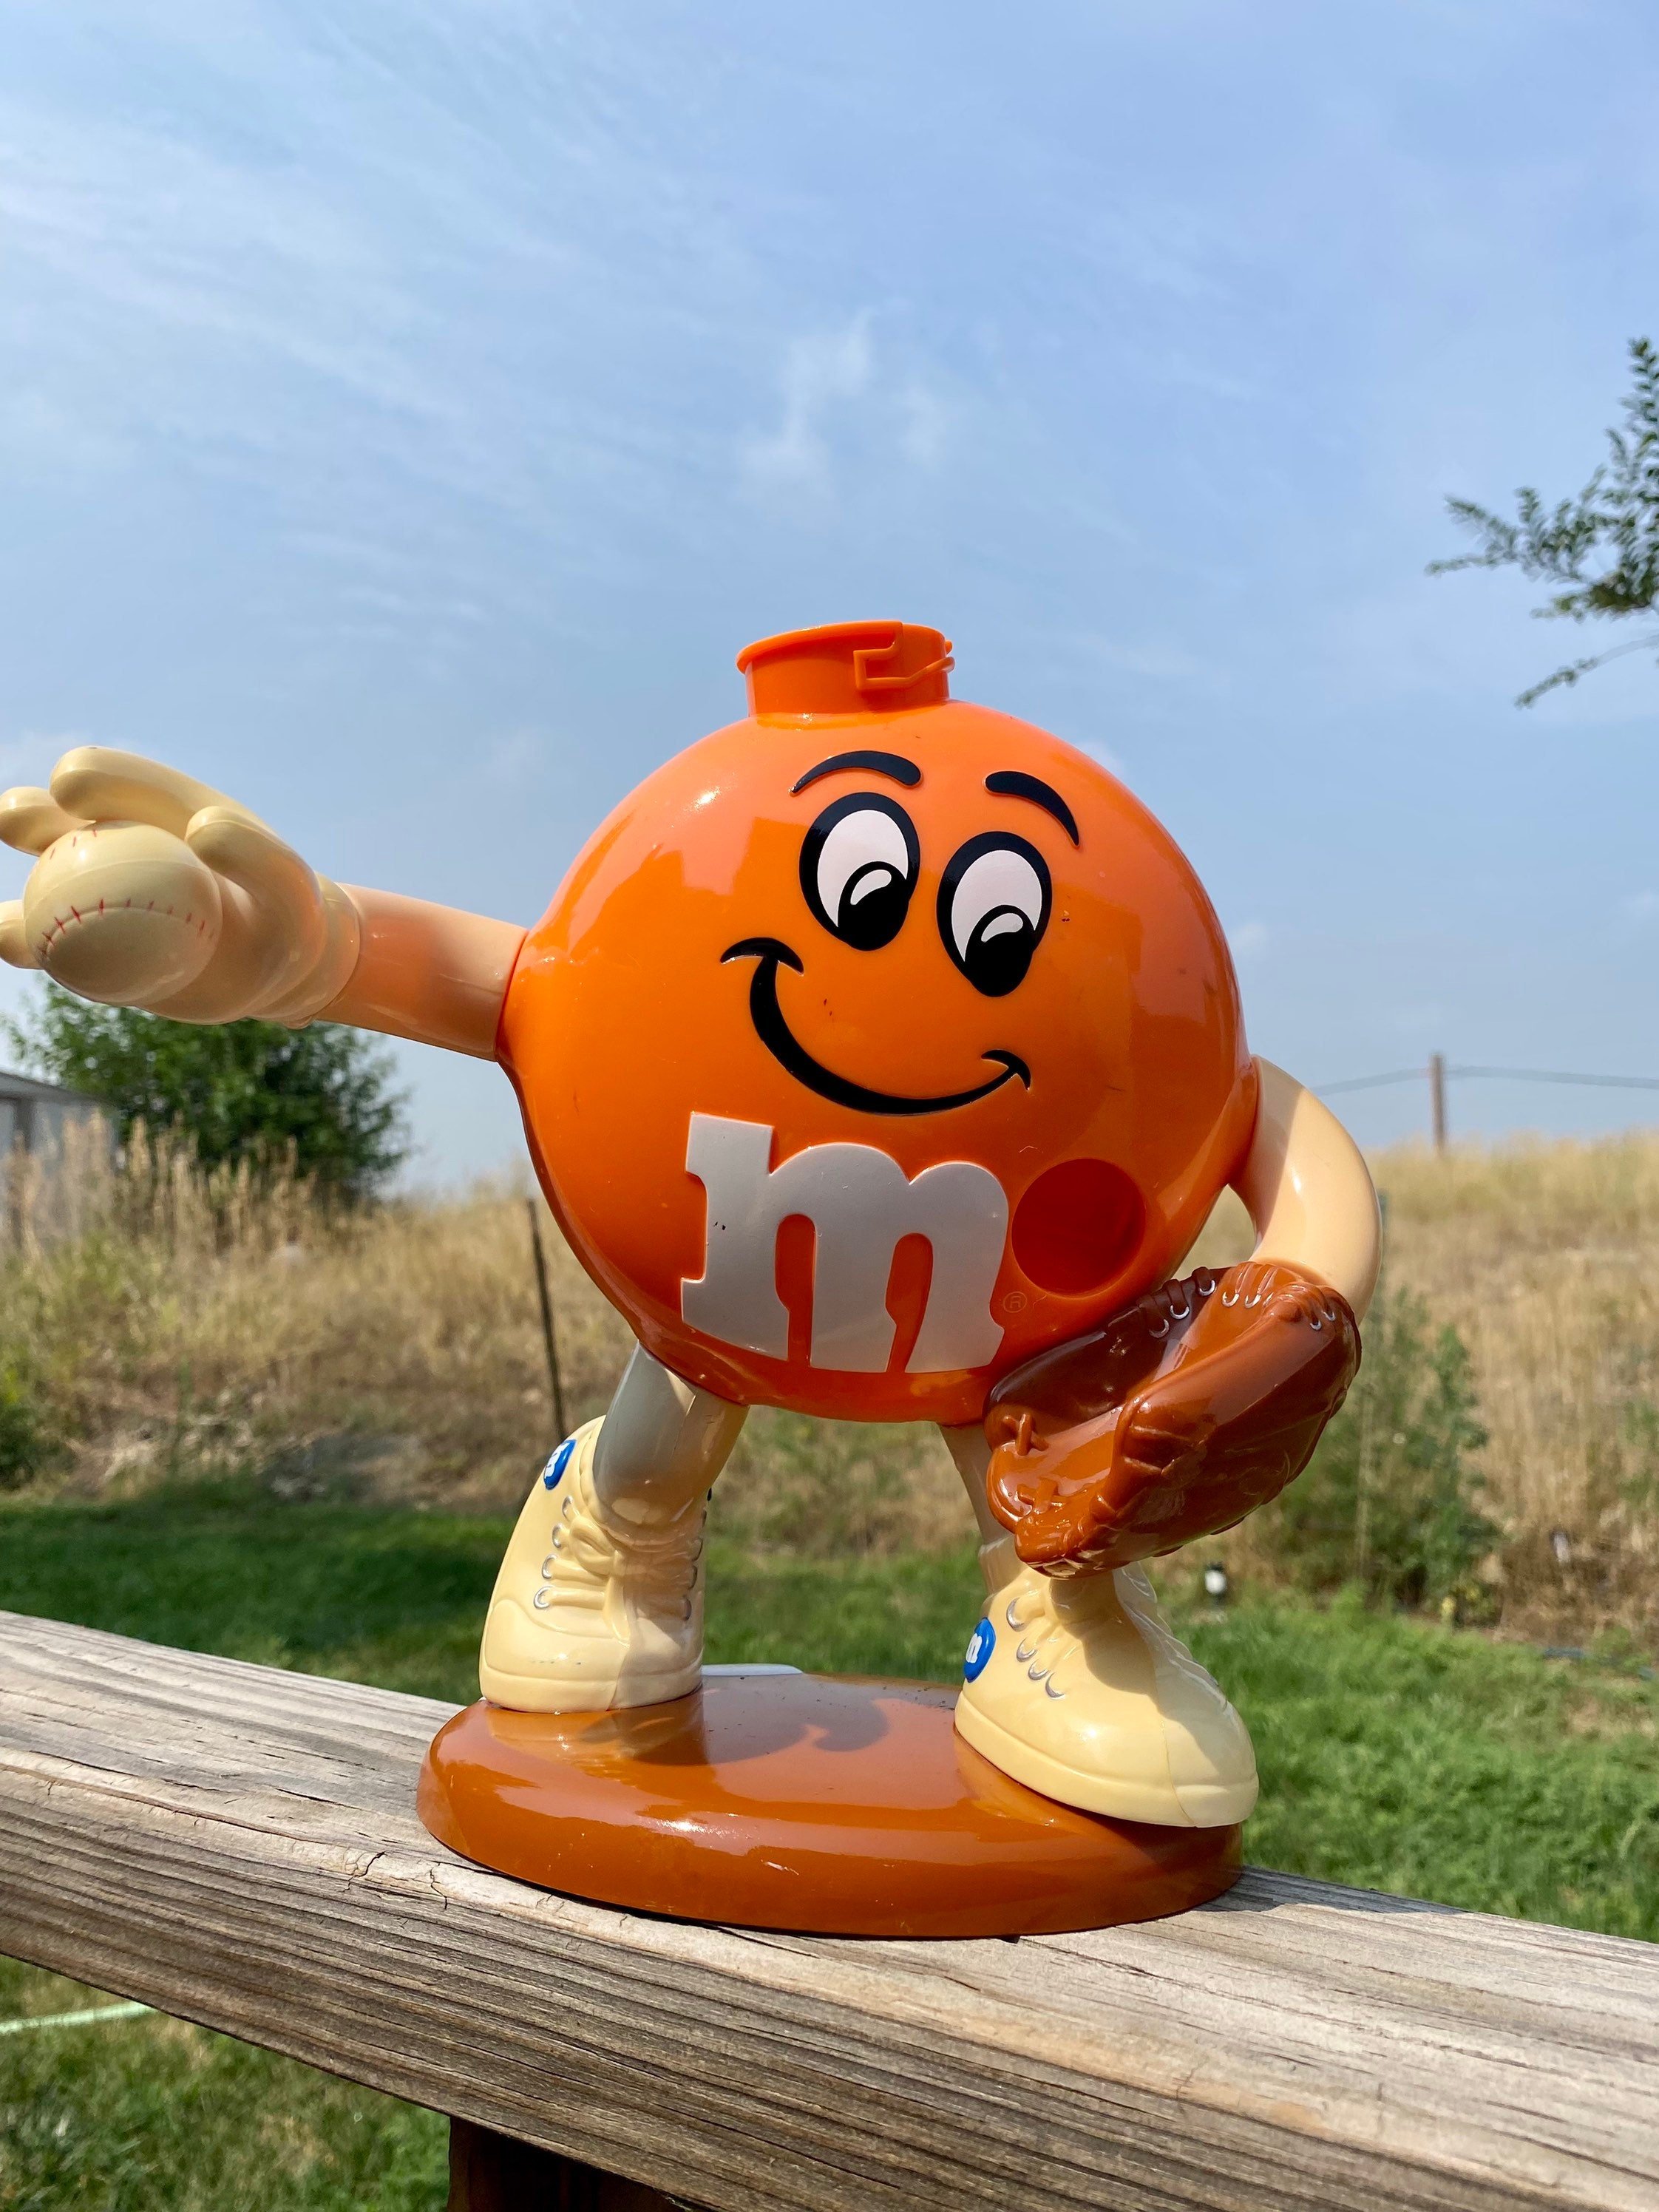 Best Rare Orange M&m Dispenser for sale in Medford, Oregon for 2023